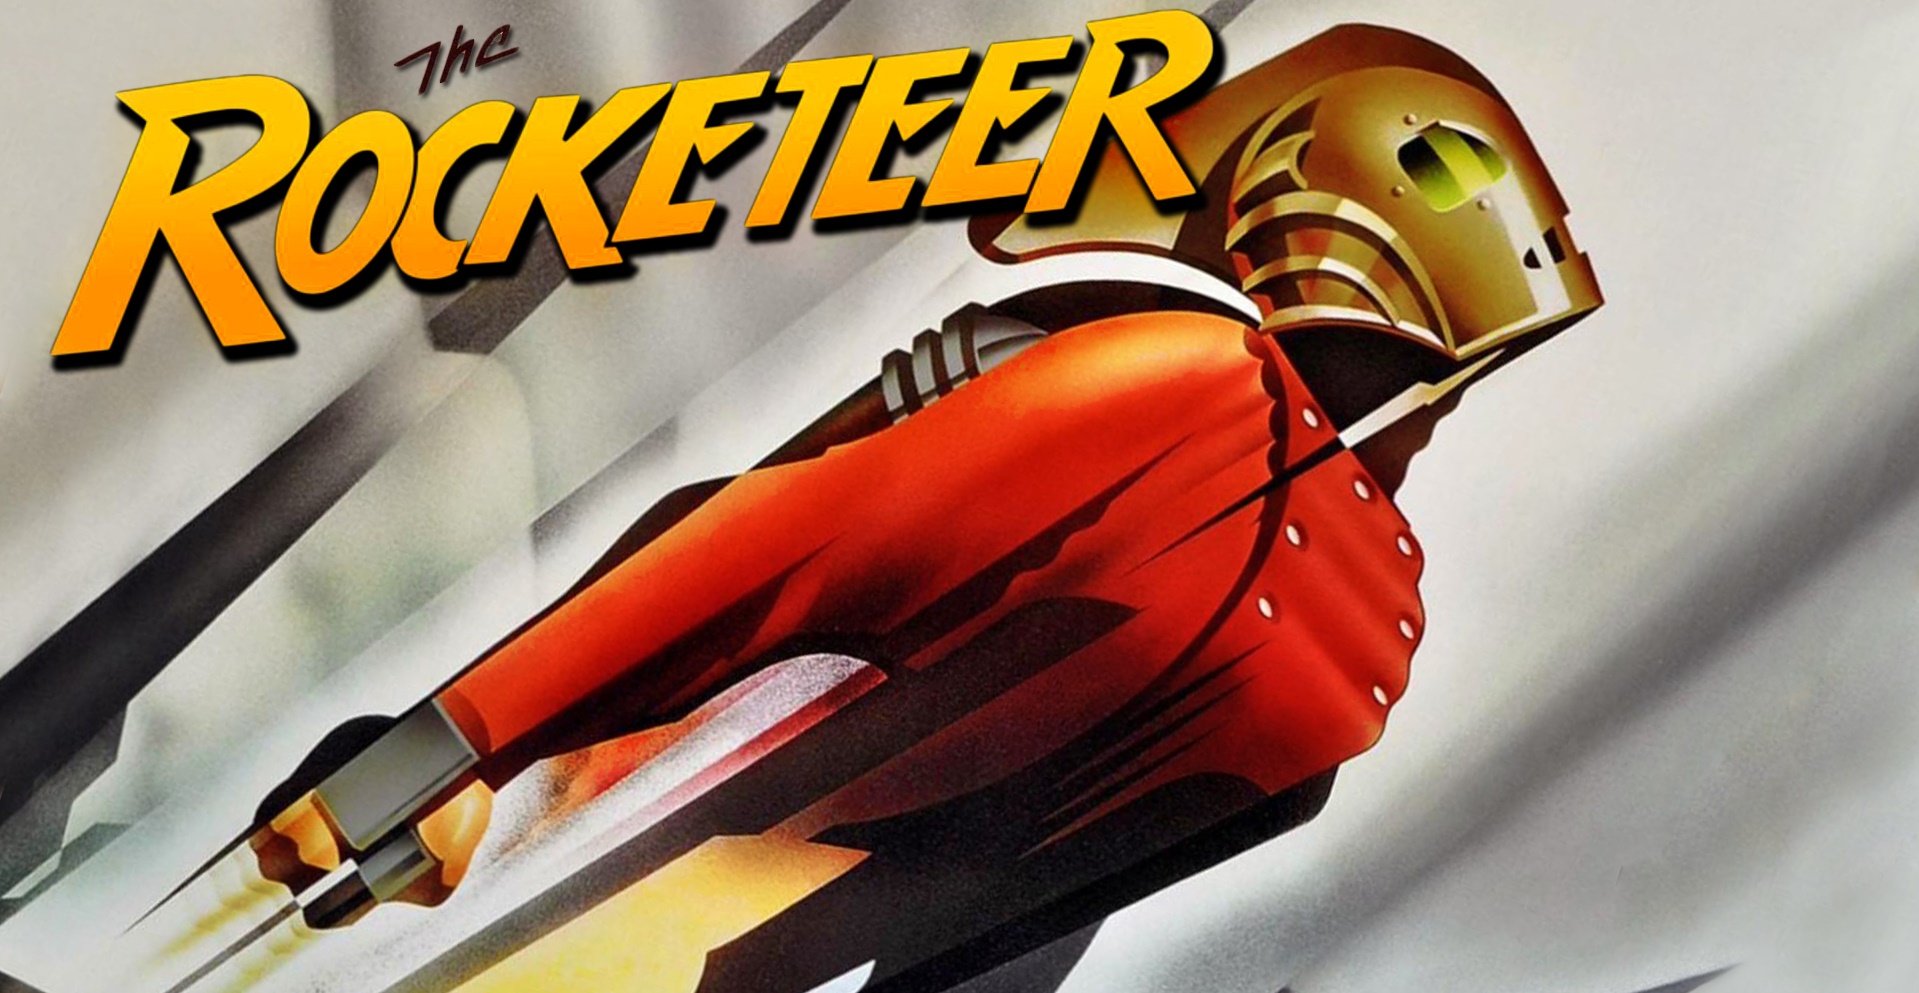 Walt Disney Studios najavio reboot filma "The Rocketeer"